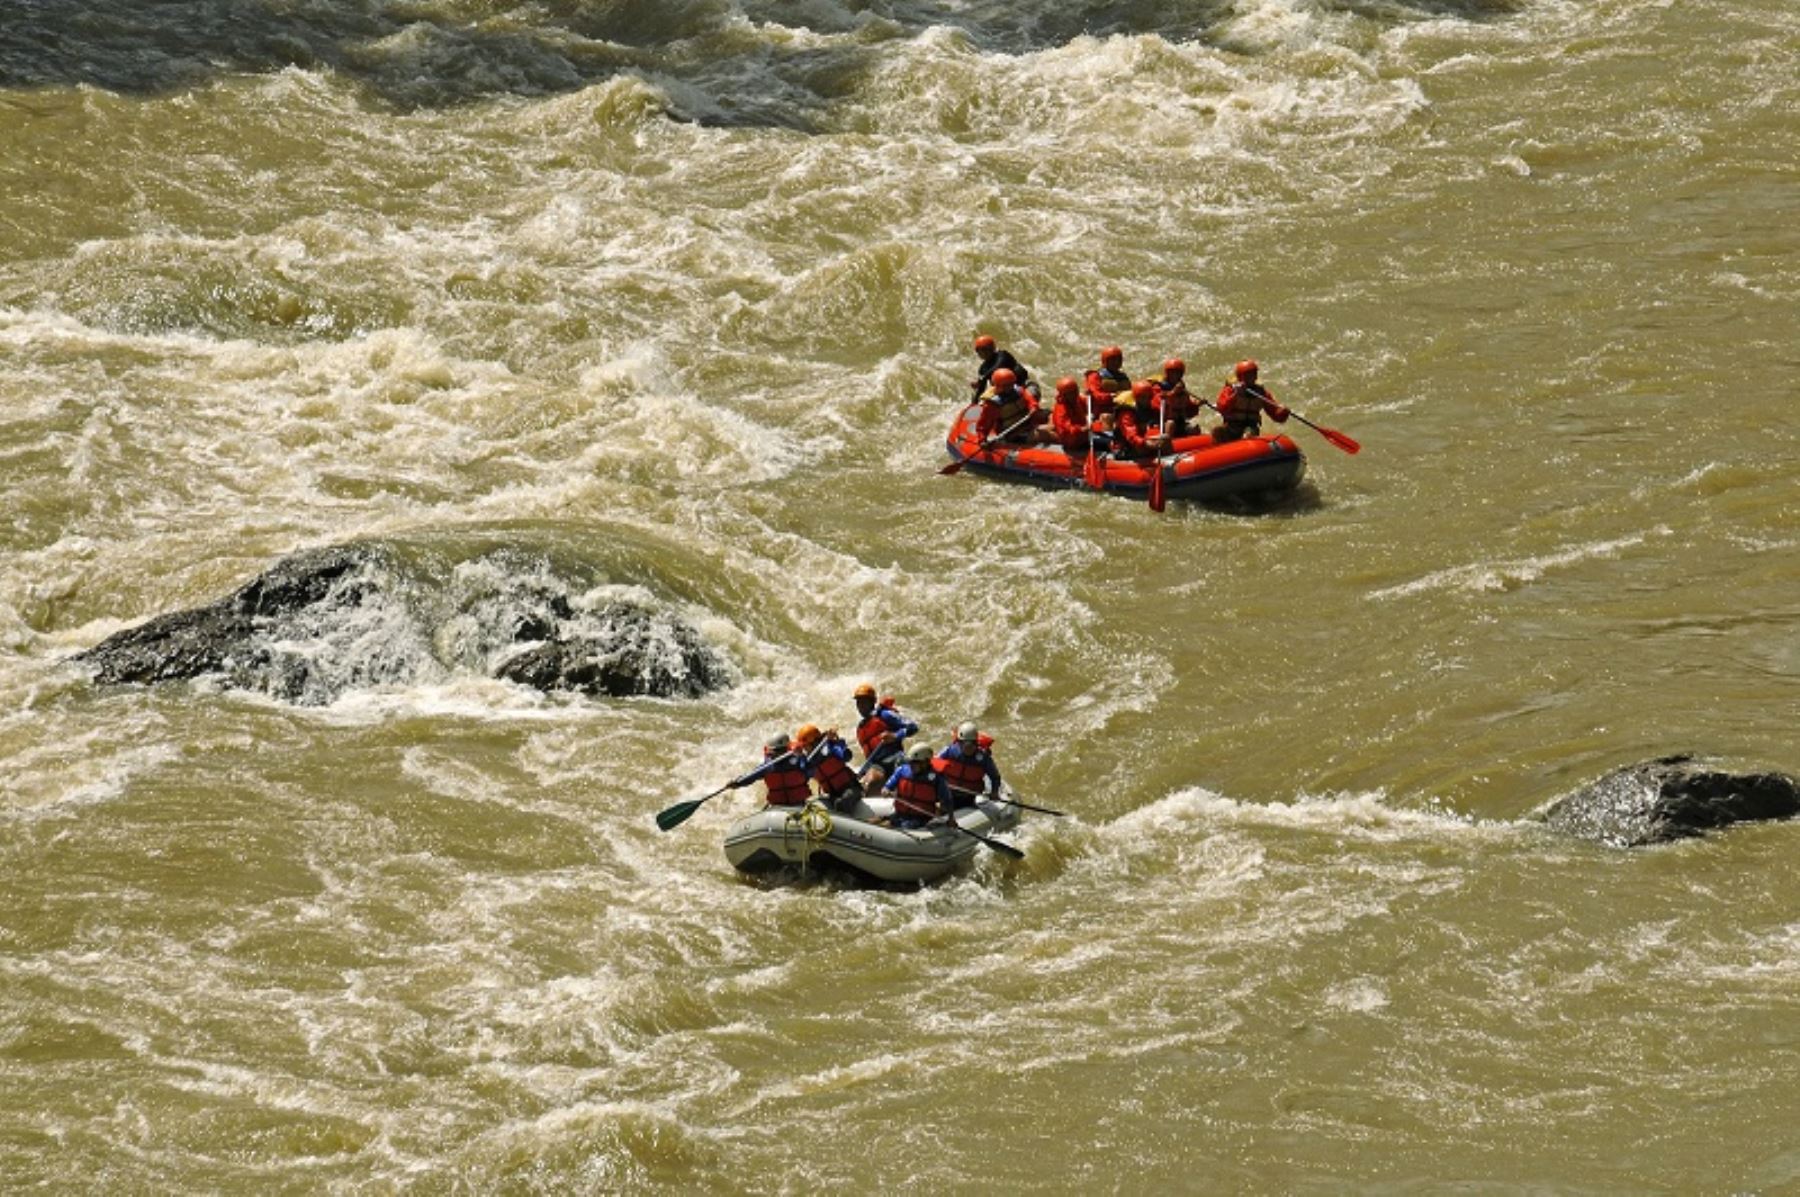 Perú genera alto interés en cumbre mundial del turismo de aventura. Canotaje en el río Colca, Arequipa. Foto: Promperú/James Posso